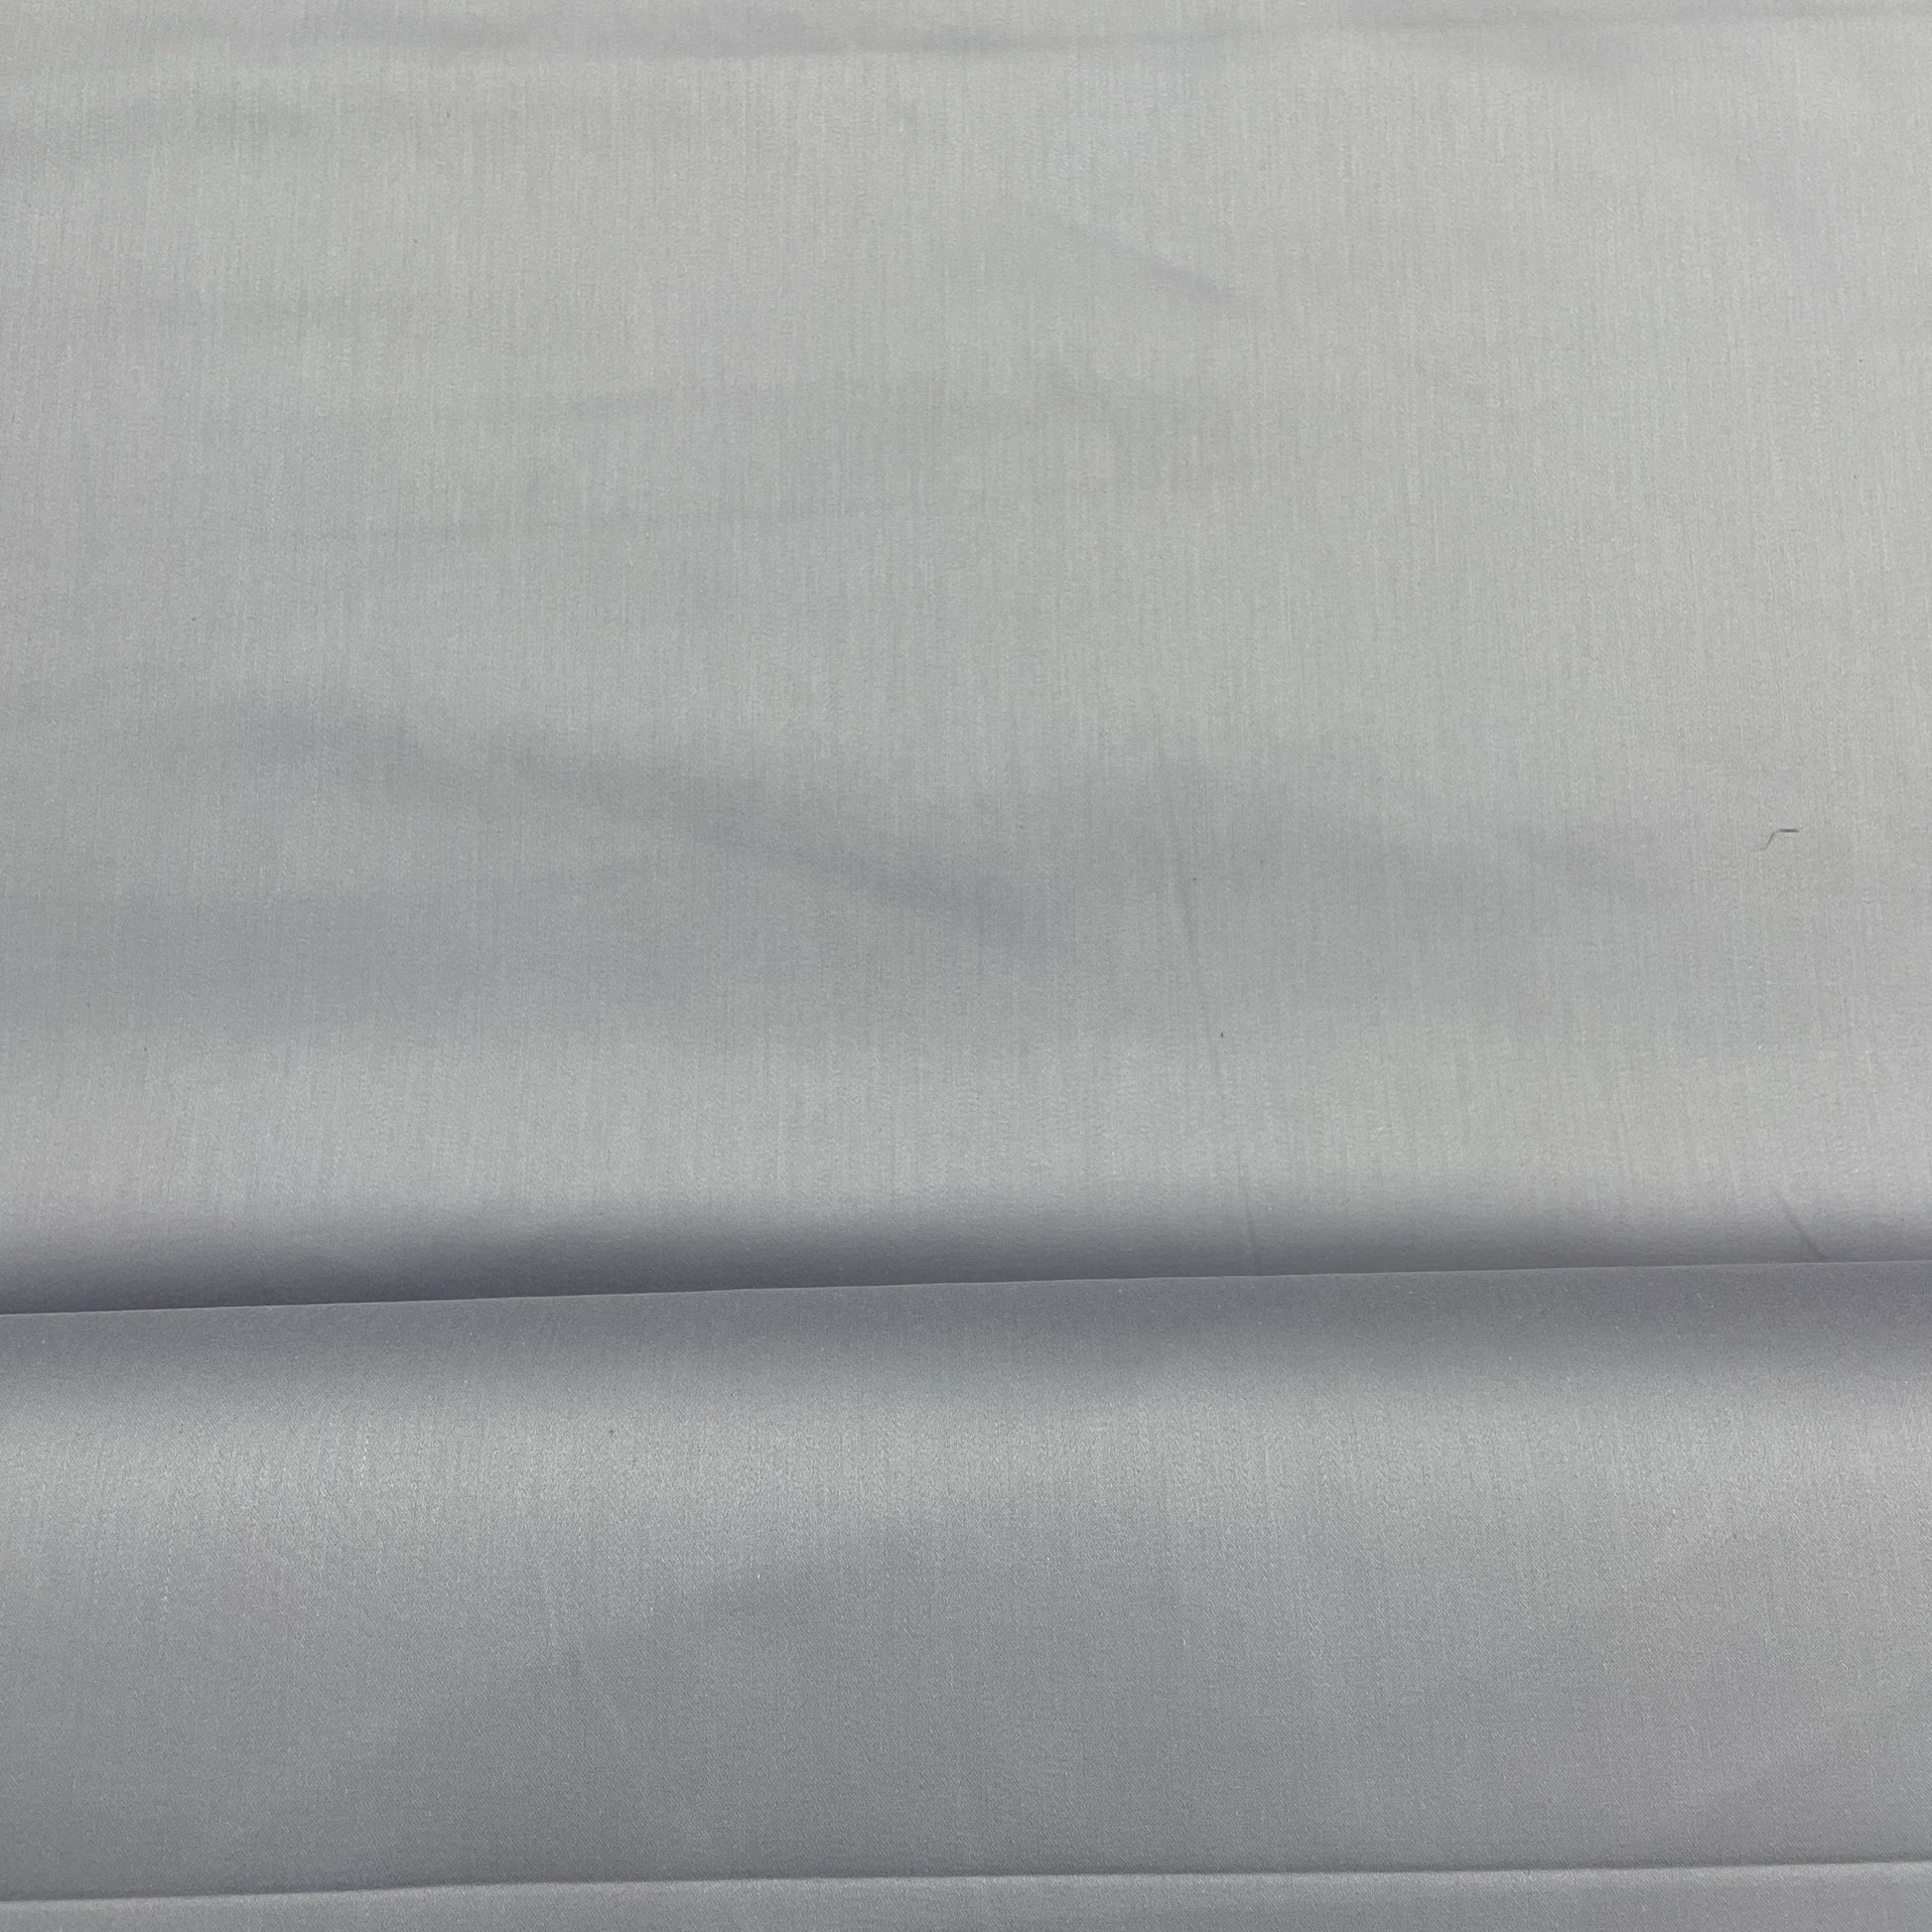 Wholesale Linen Cotton Blended Fabirc Grey&dyed&print Manufacturer